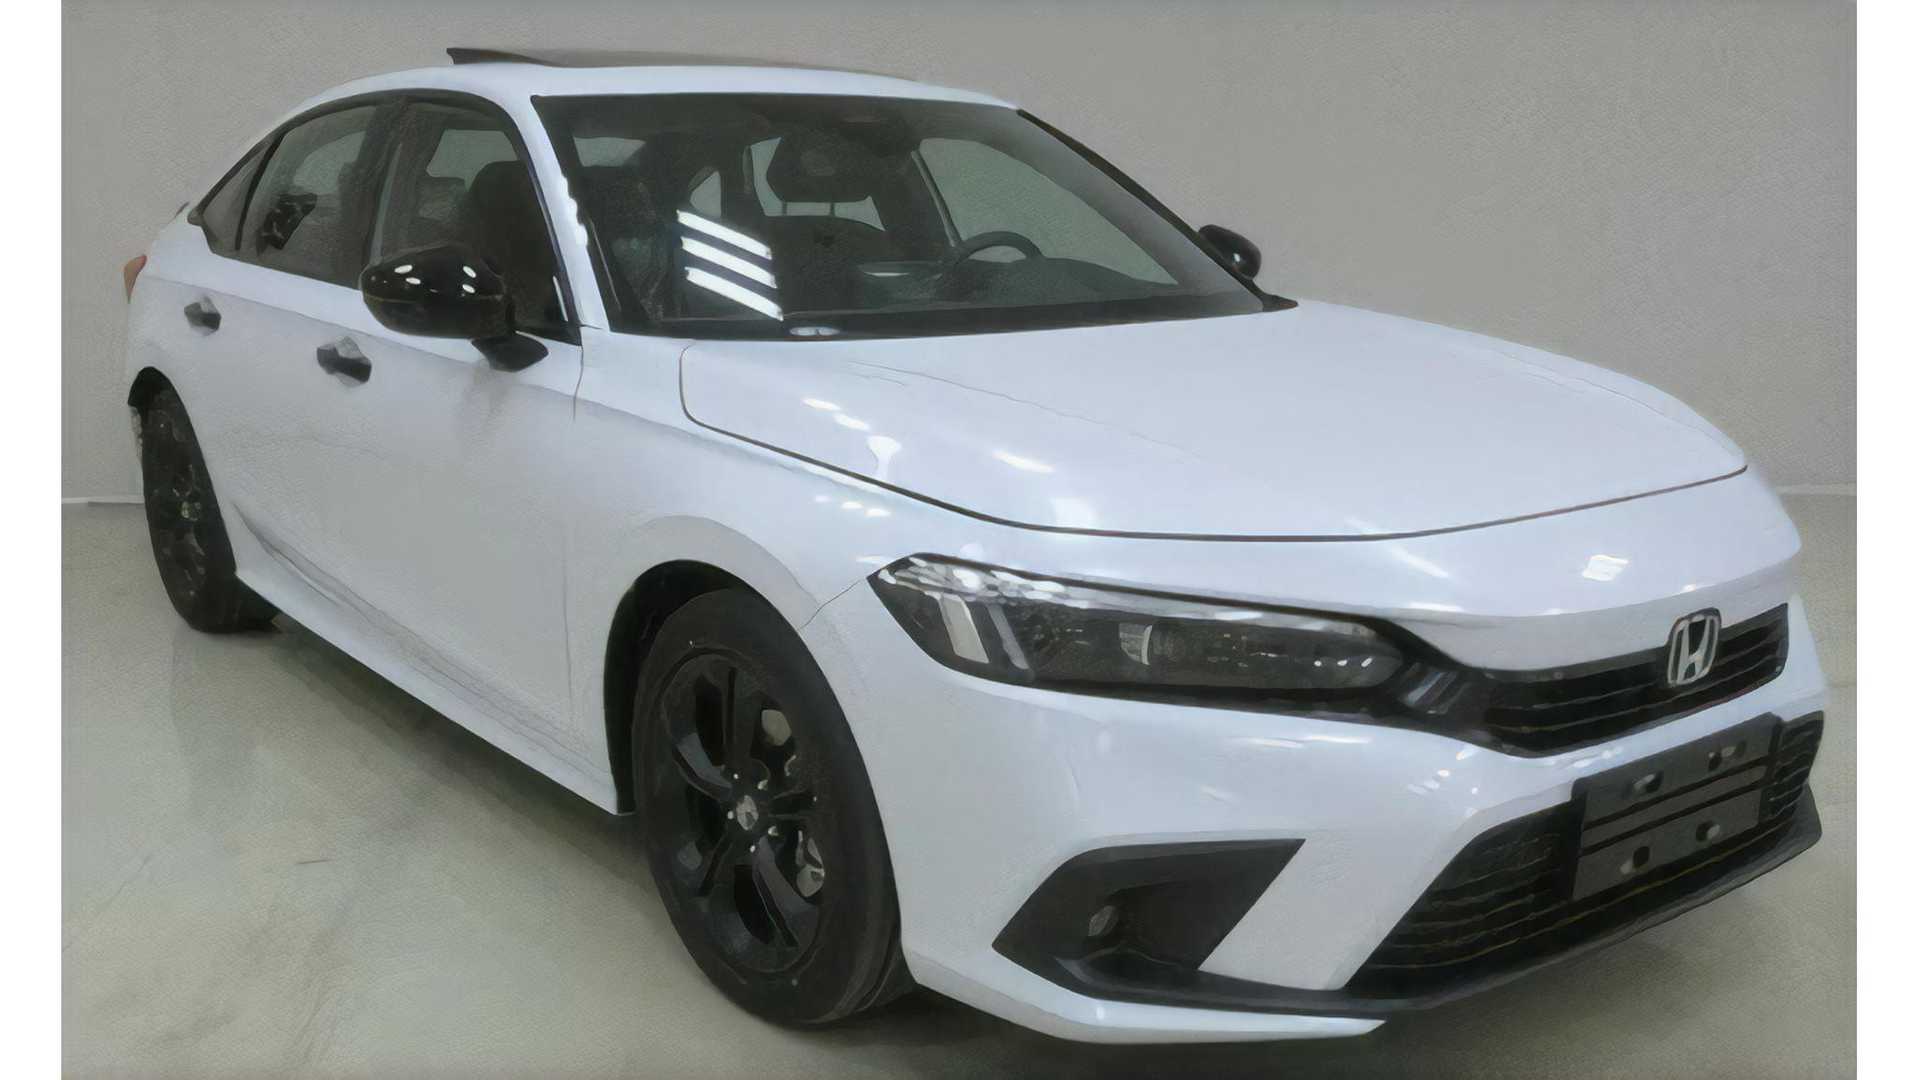 2022 Honda Civic Sedan Production Version For China (2)